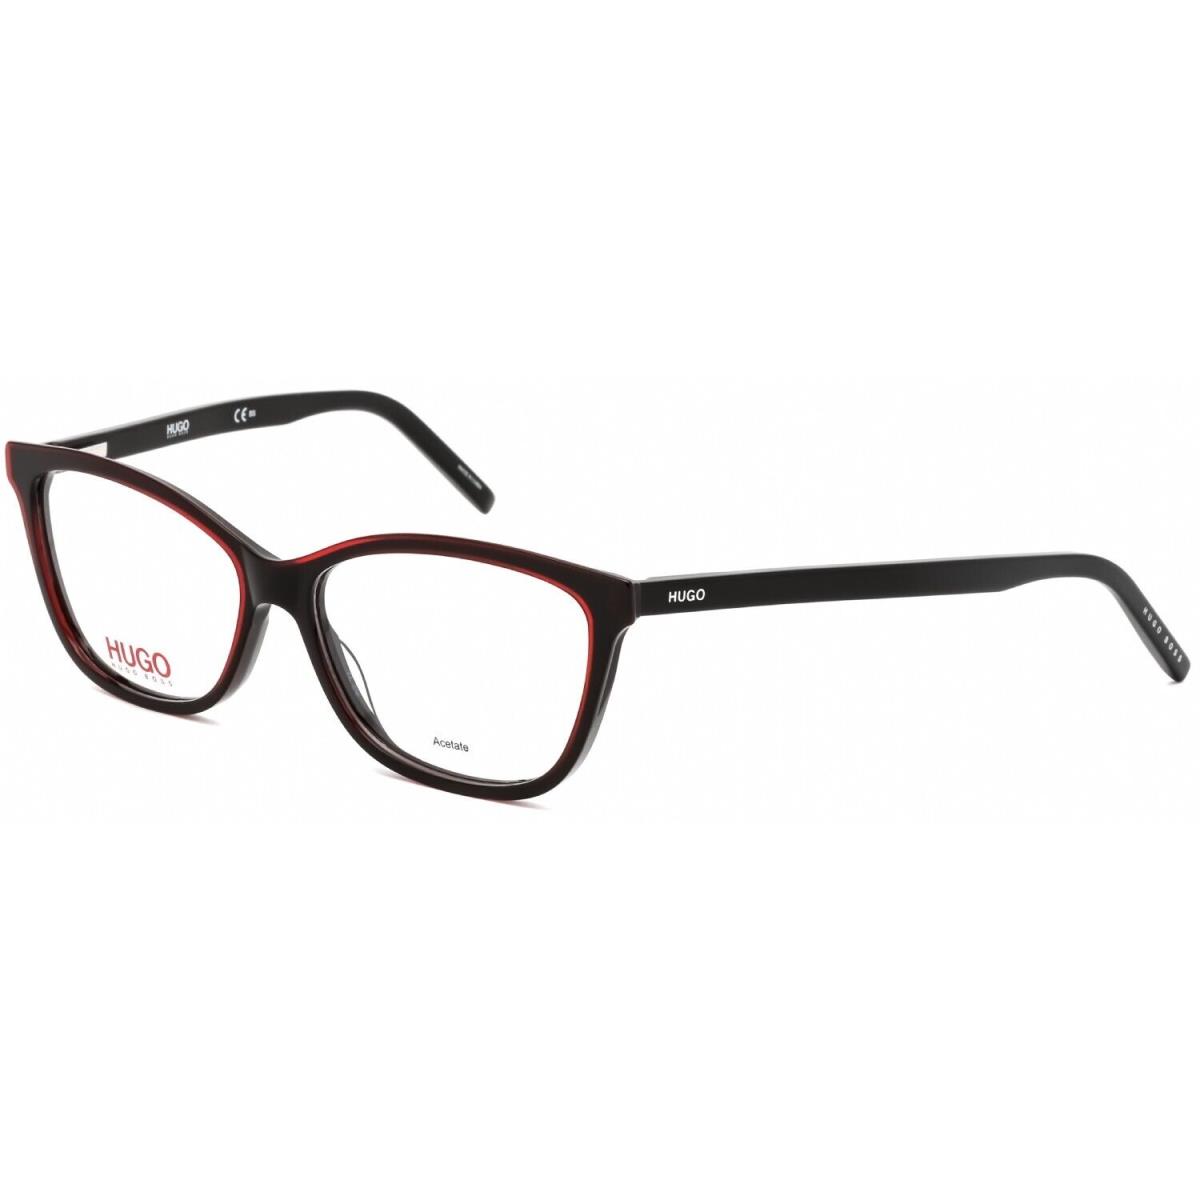 Hugo Boss HG1053 Oit Square Shiny Black Red Eyeglasses - Frame: SHINY BLACK W/ RED STRIPE